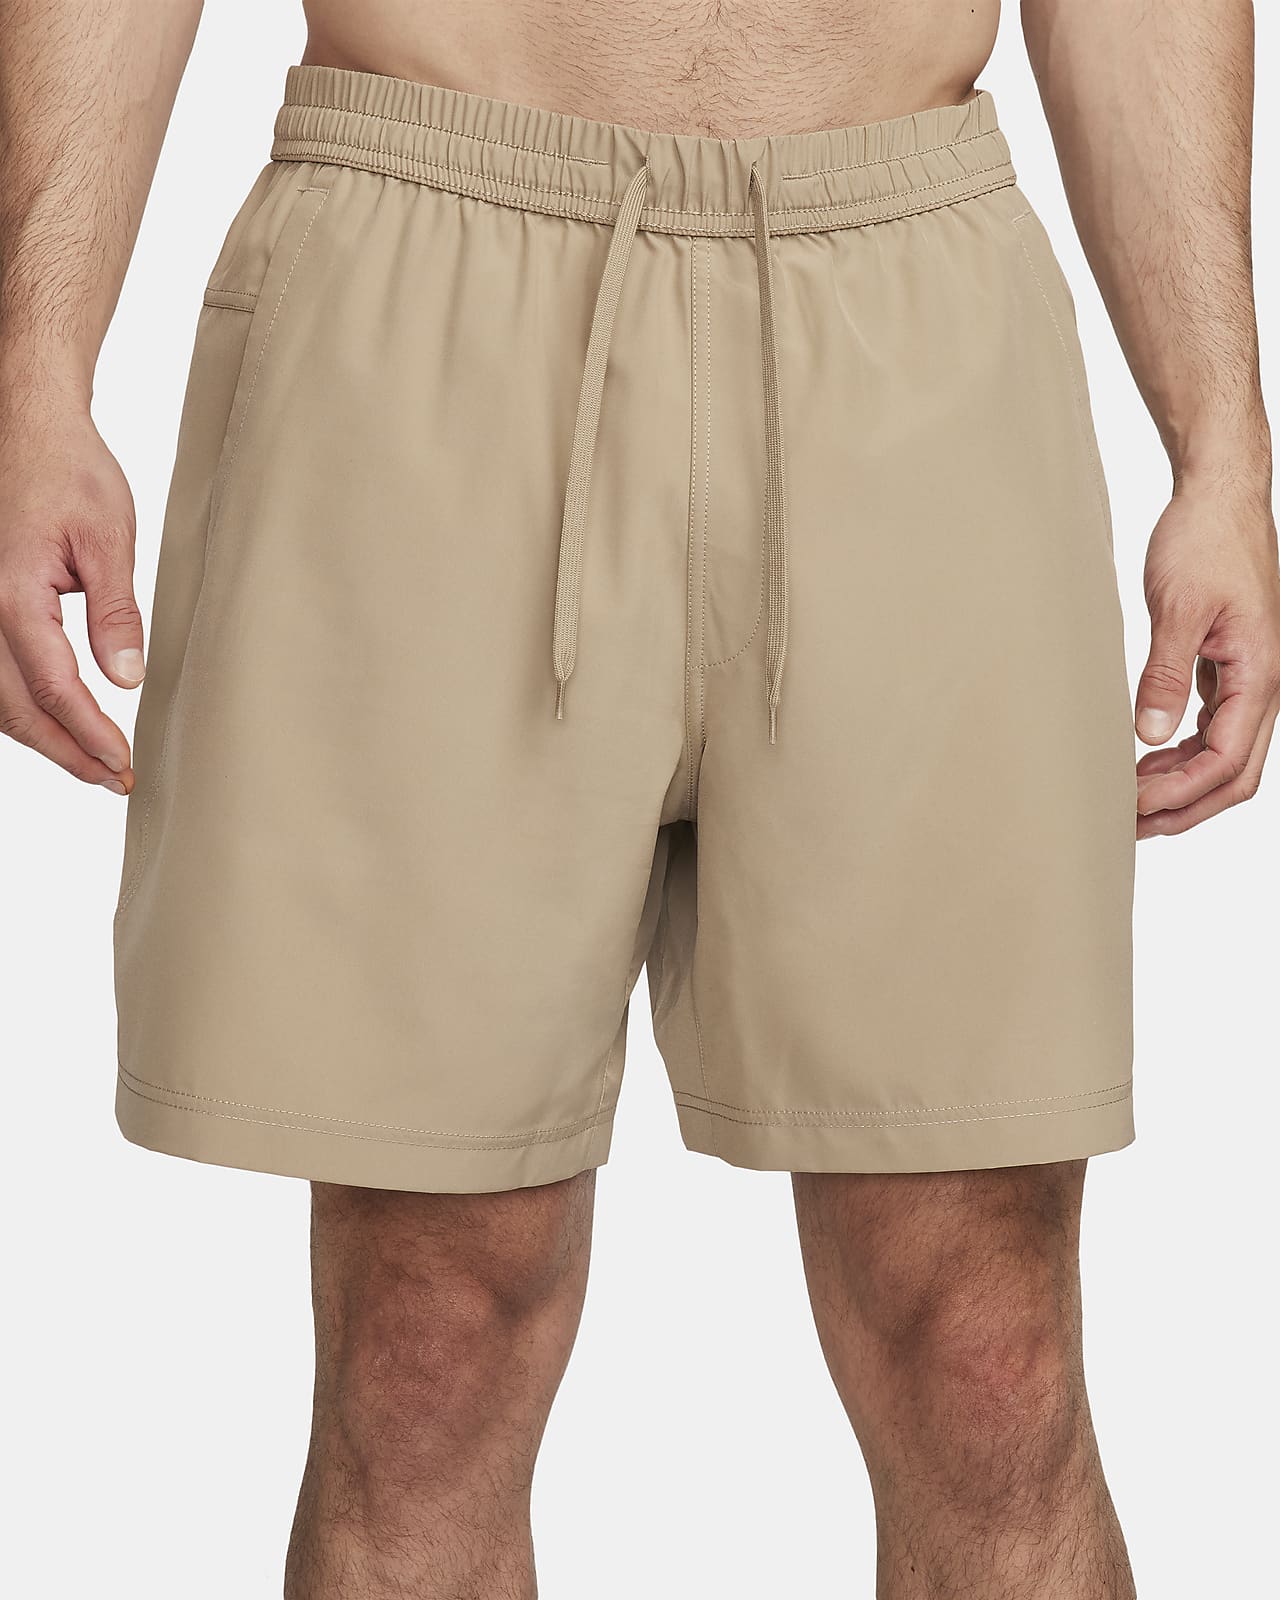 Nike Form Men's Dri-FIT 7 Unlined Versatile Shorts.